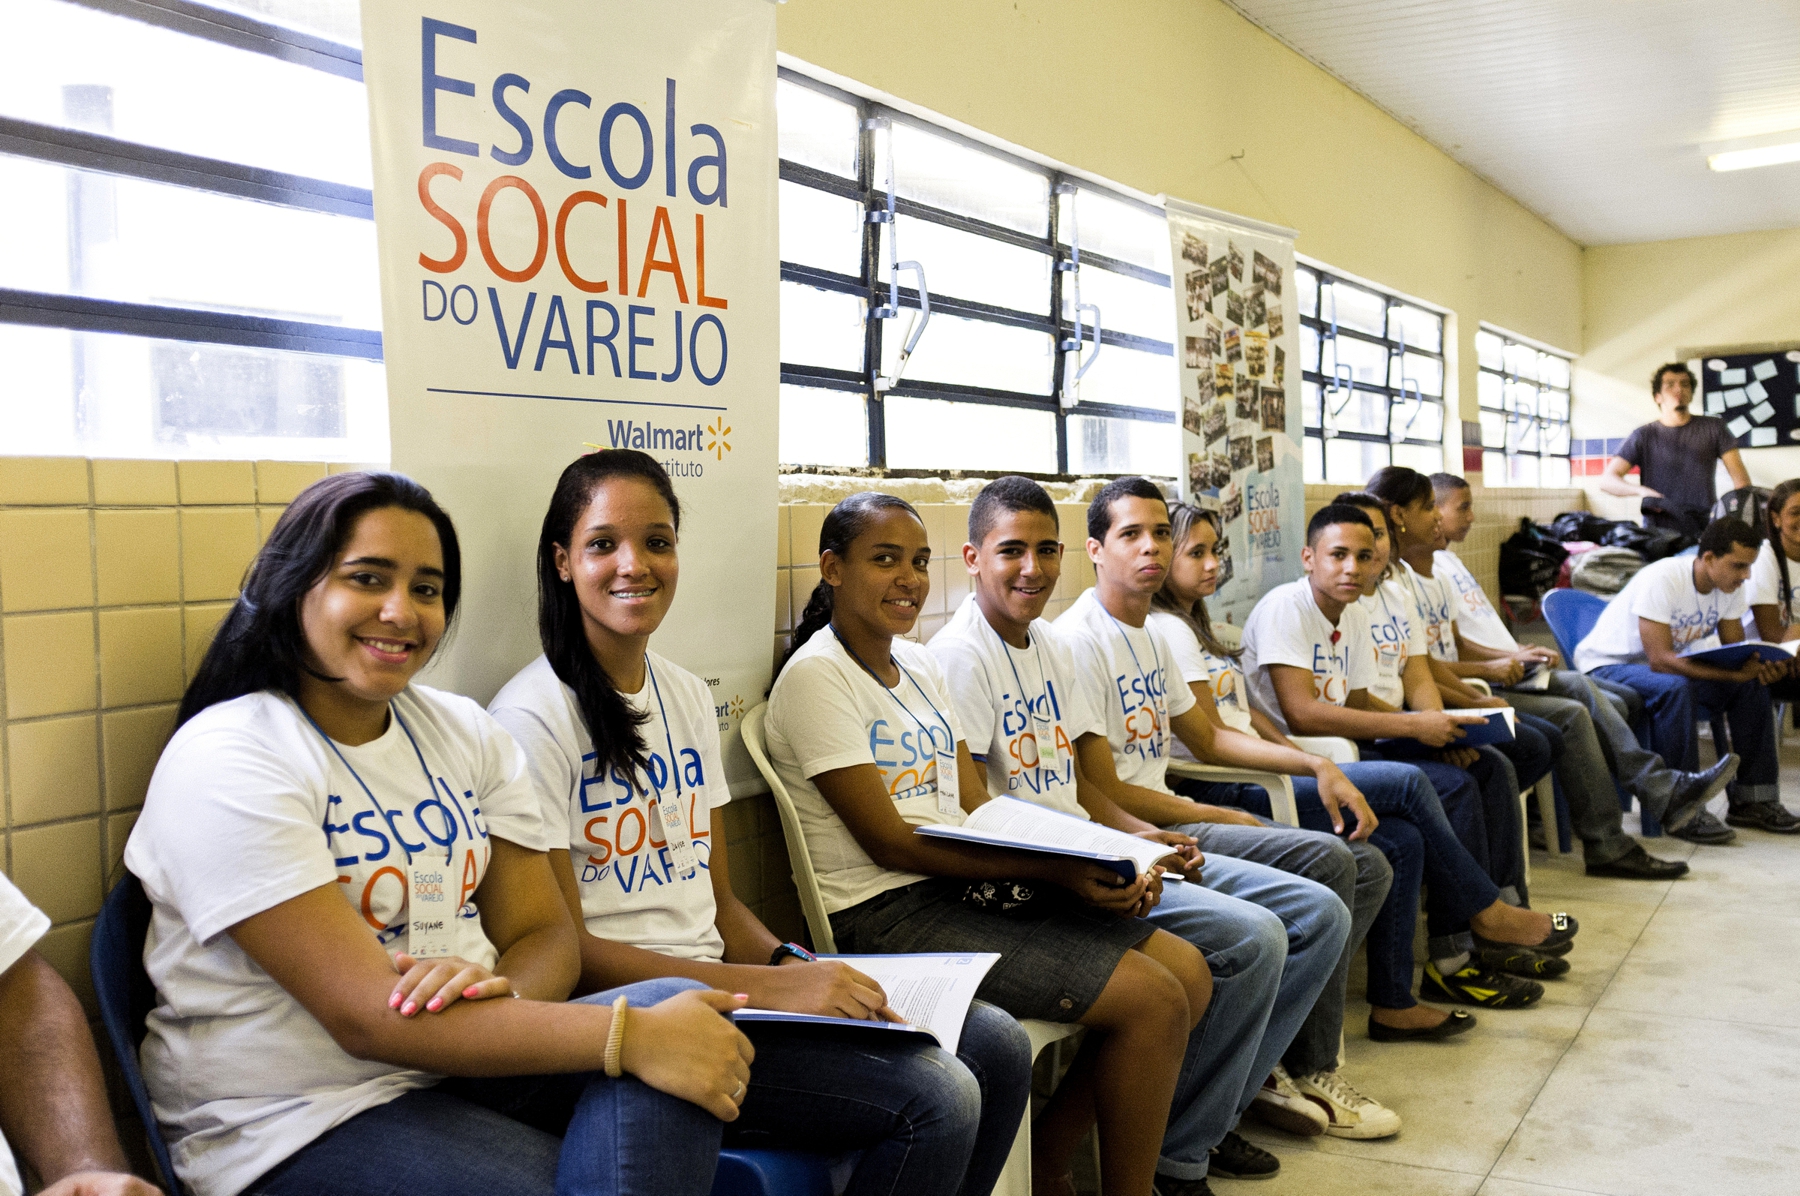 Foto ESV-Escola social do varejo - walmart - site Cultura Osasco